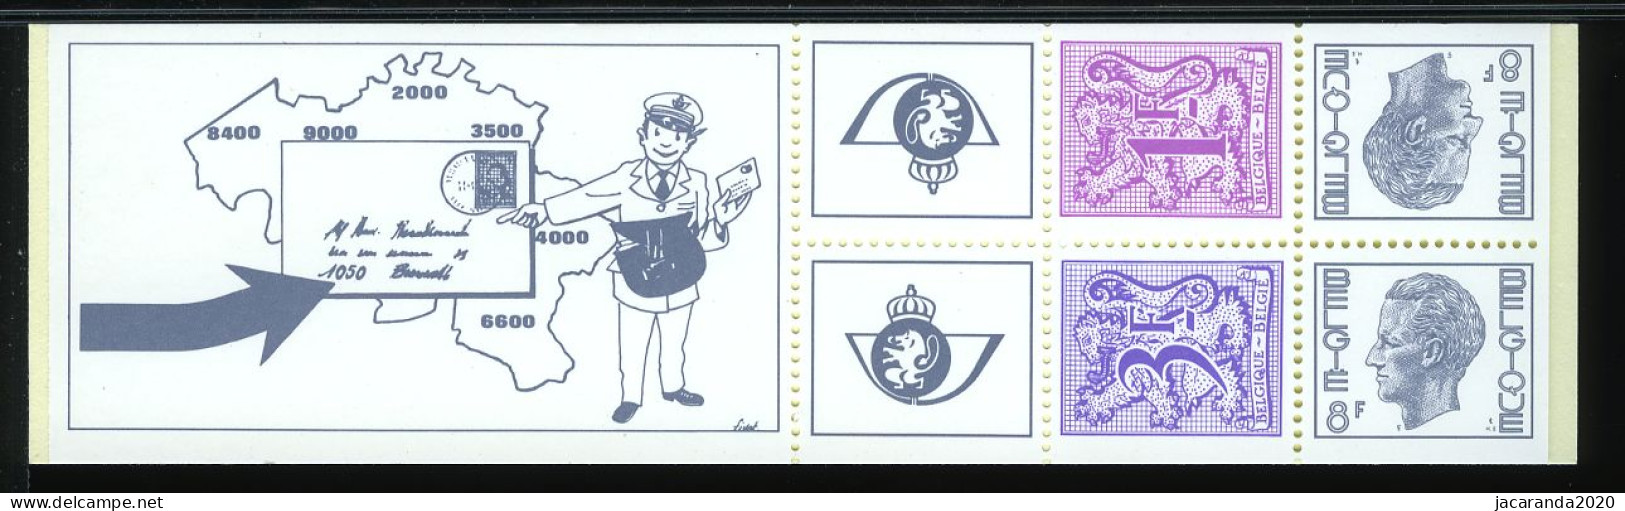 België B15 - Koning Boudewijn - Cijfer Op Heraldieke Leeuw - Roi Baudouin - Chiffre Sur Lion Héraldique - 1978 - 1953-2006 Moderne [B]